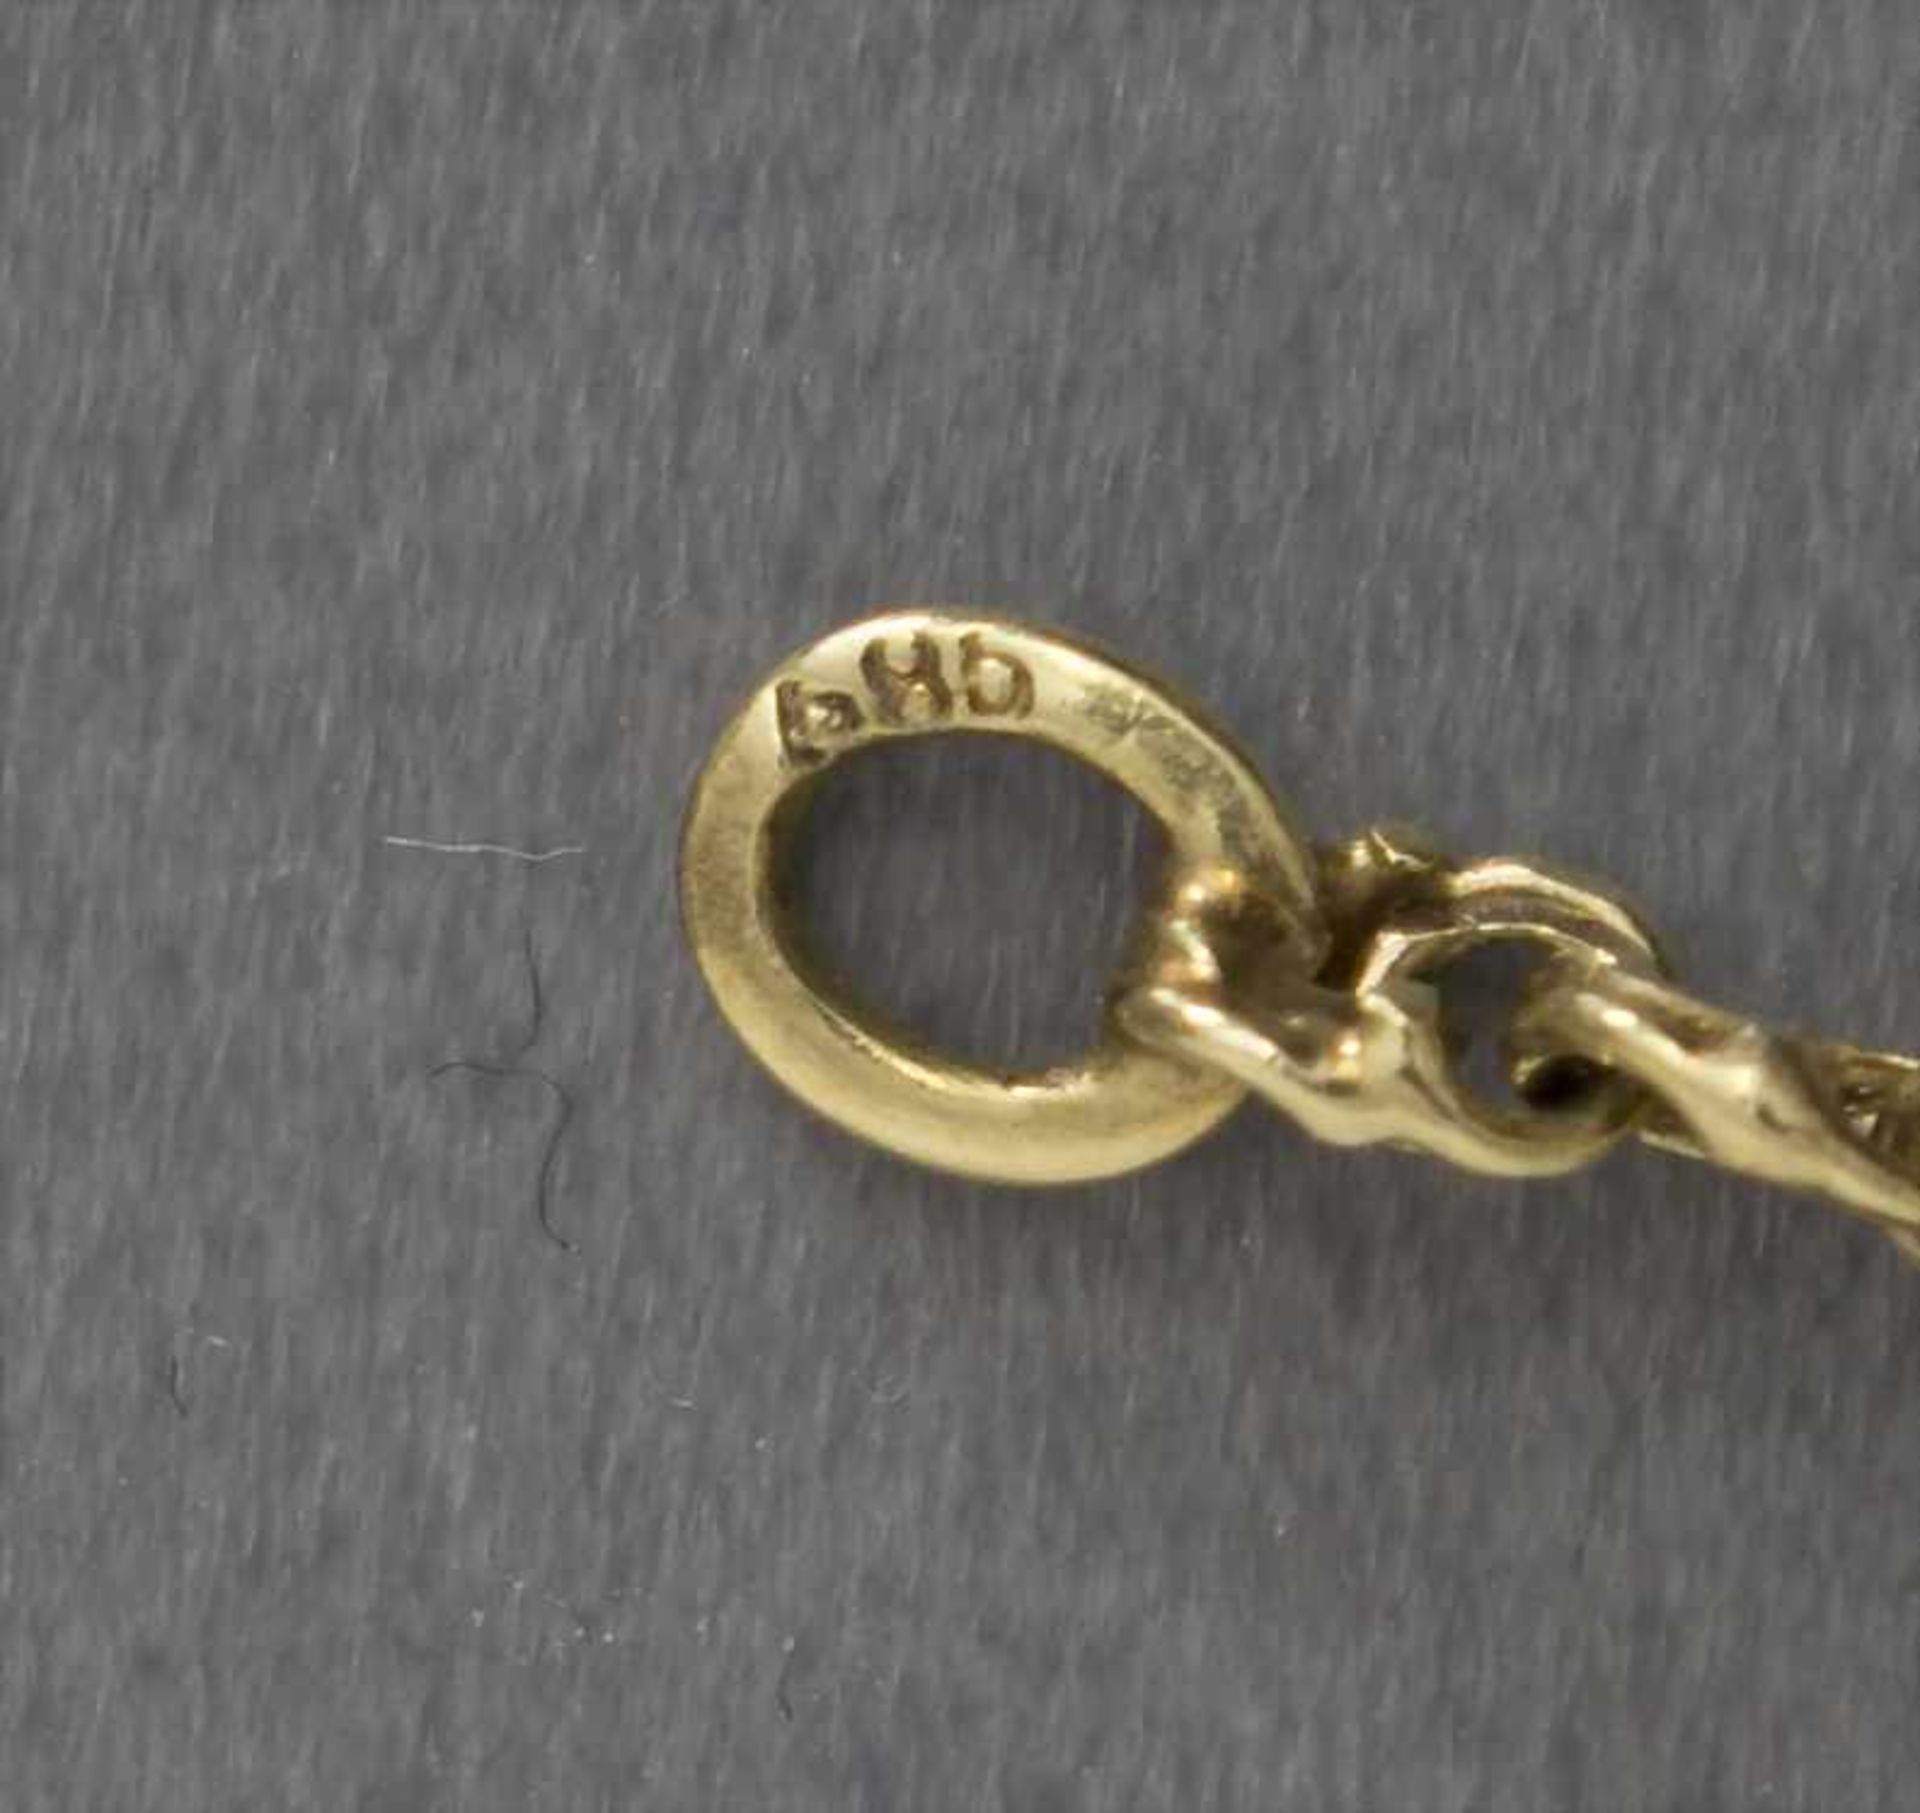 Halskette in Gold / A necklace in goldMaterial: Gelbgold Au 585/000 14 Kt, gepunzt,Länge: 46 cm, - Image 2 of 2